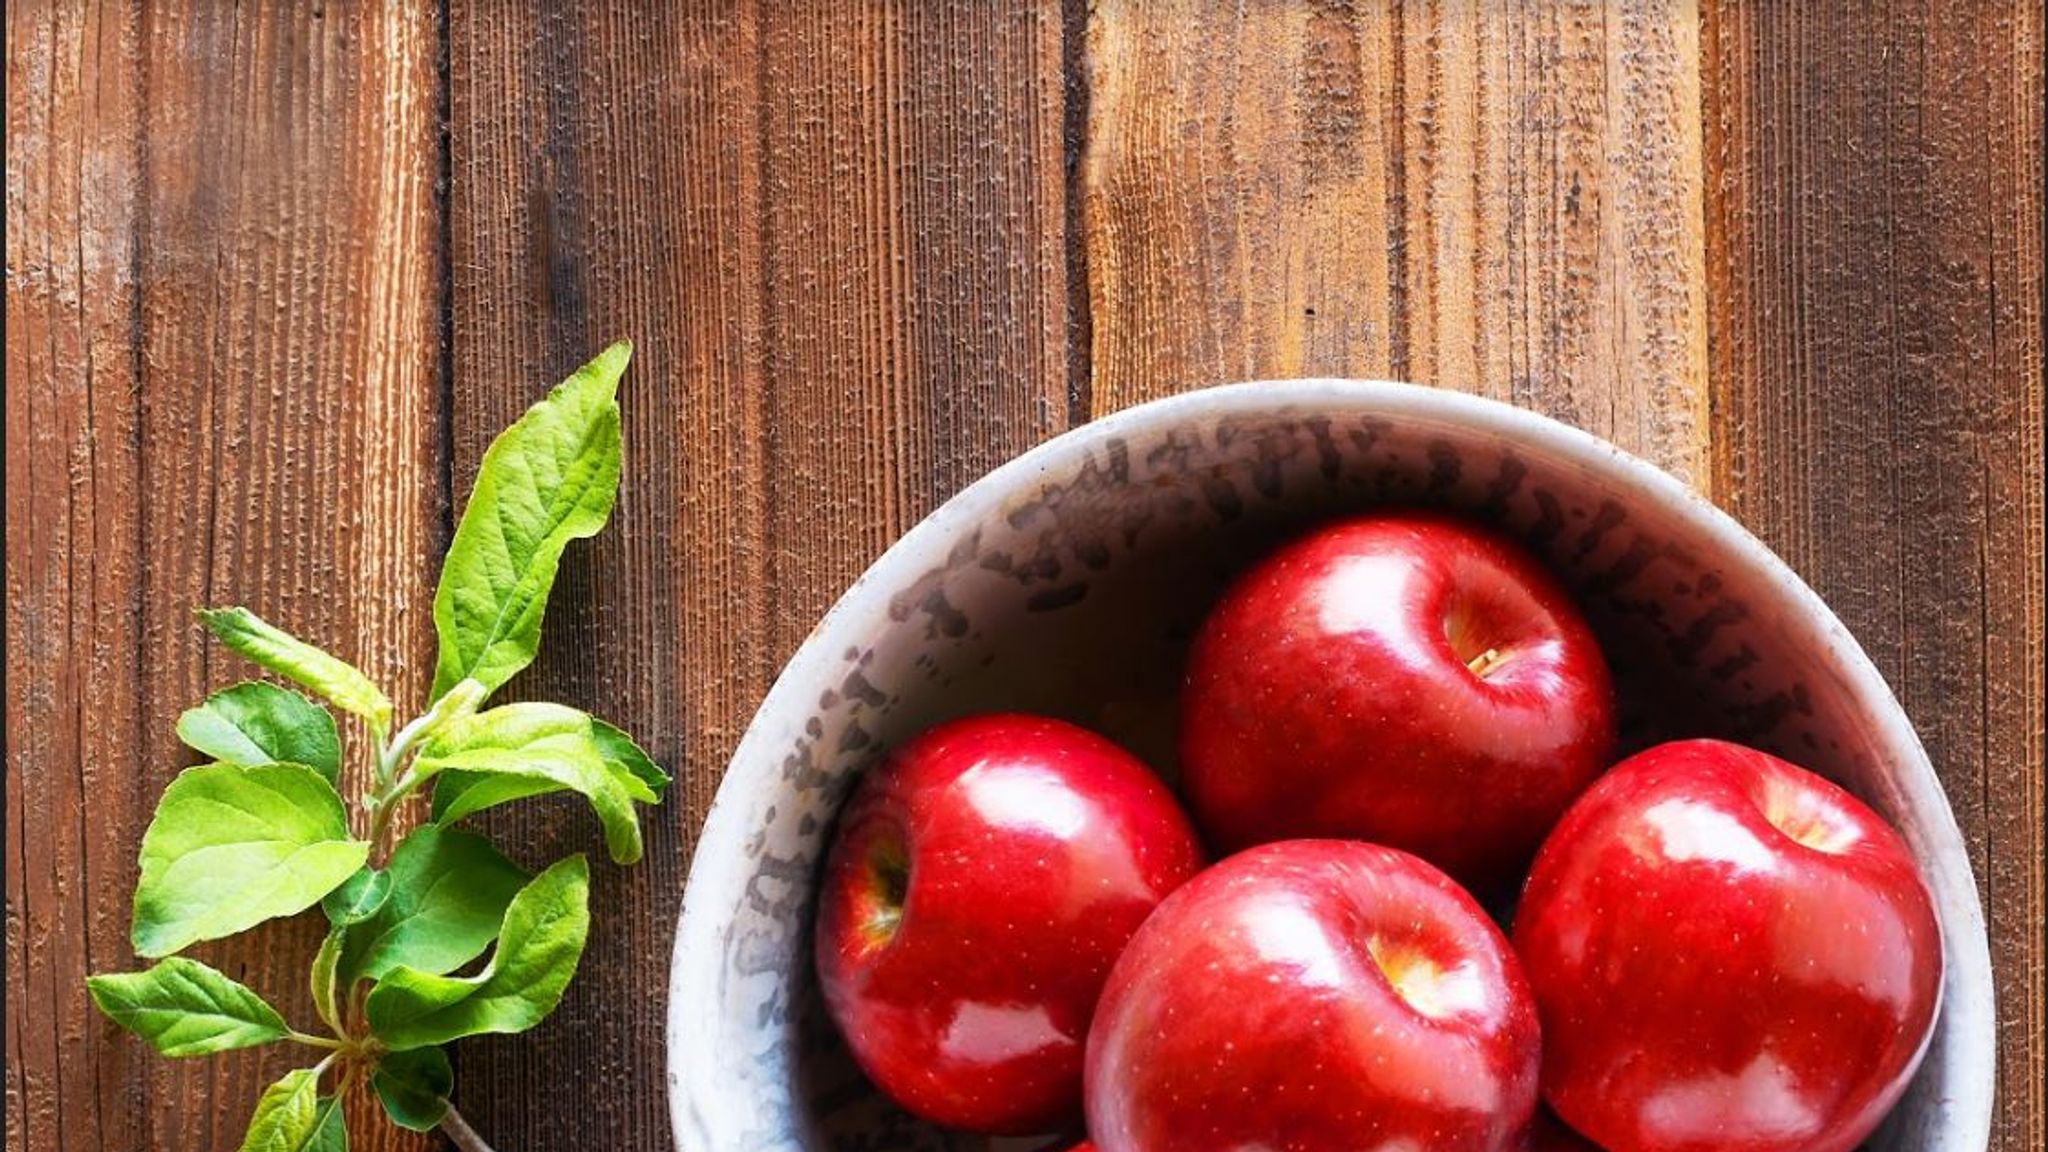 Washington bets big on new Cosmic Crisp apple - Fruit Growers News